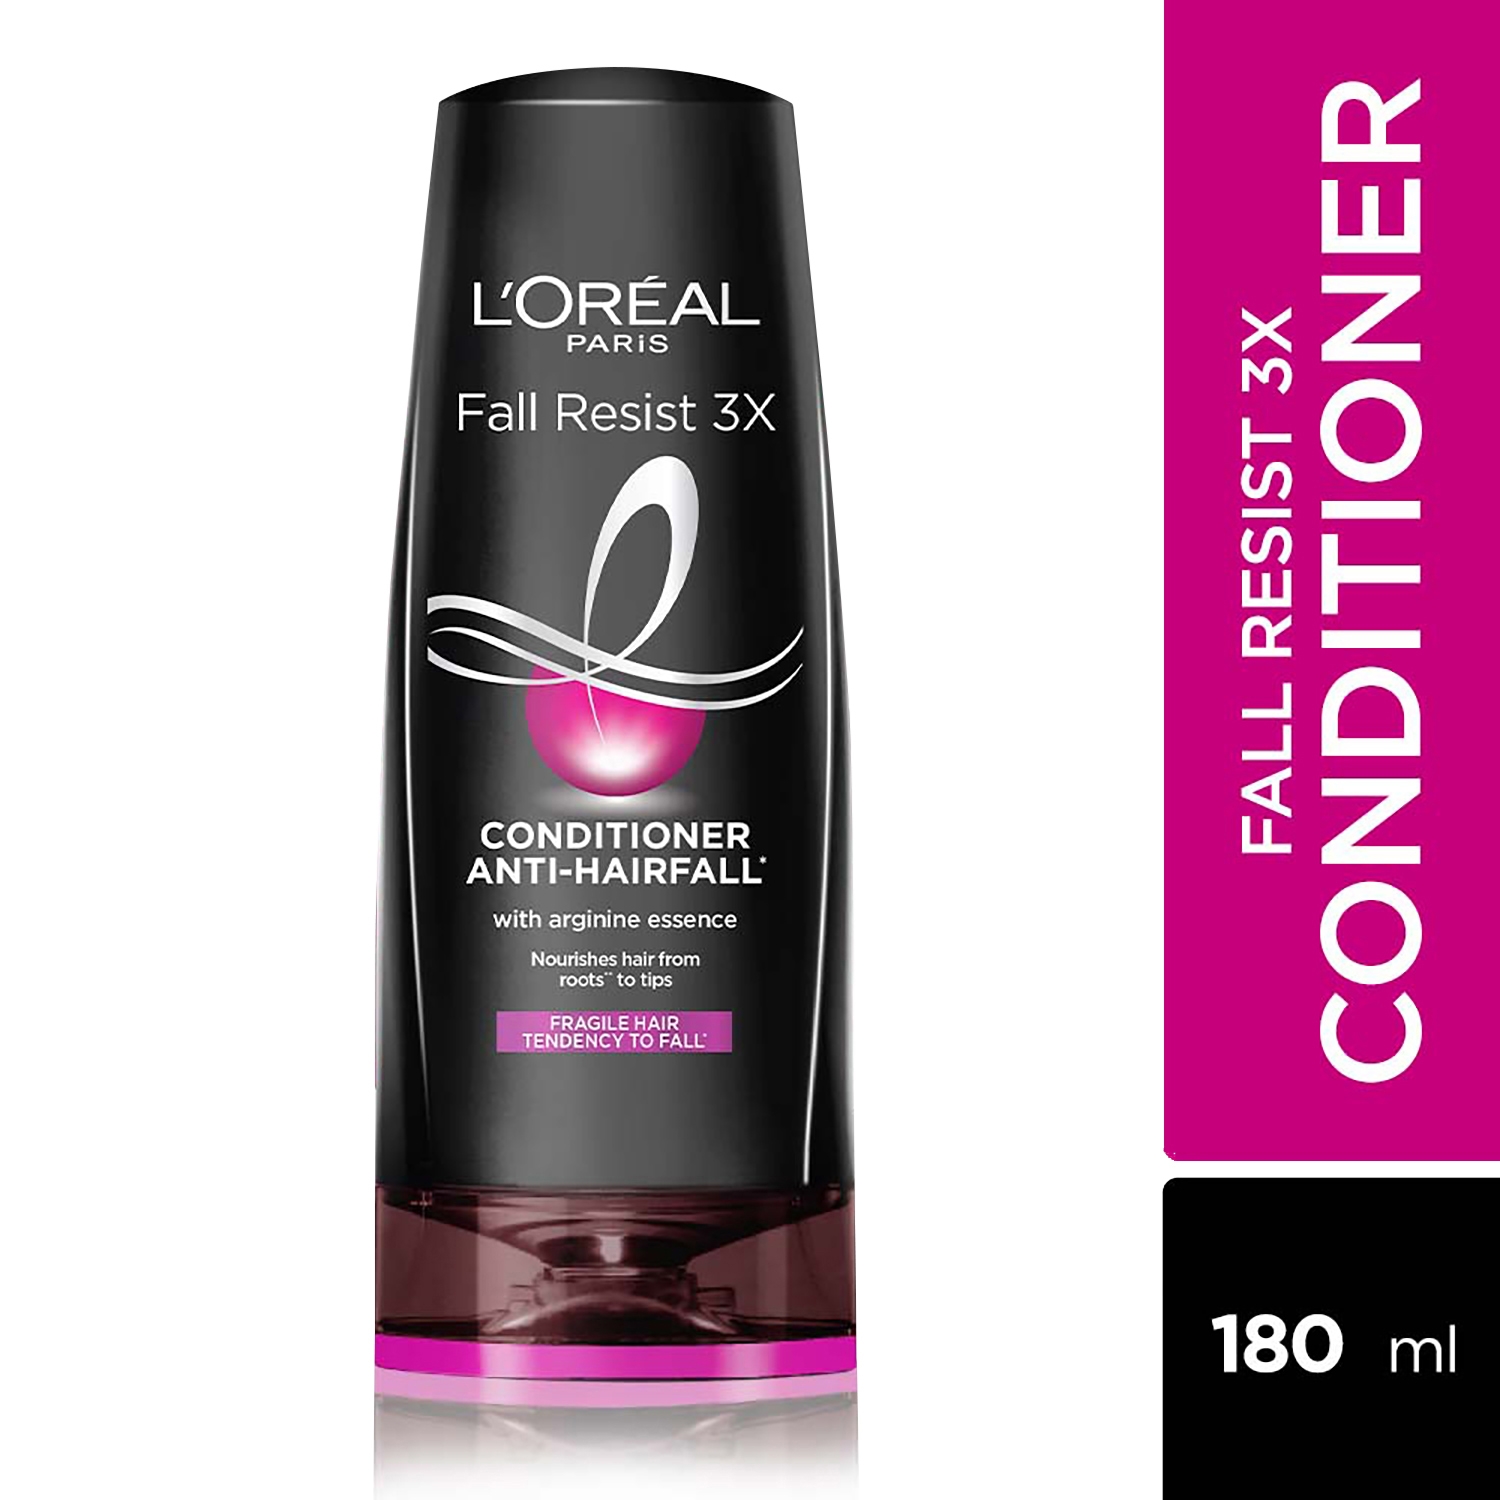 L'Oreal Paris | L'Oreal Paris Fall Resist 3X Anti-Hairfall Conditioner (180ml)